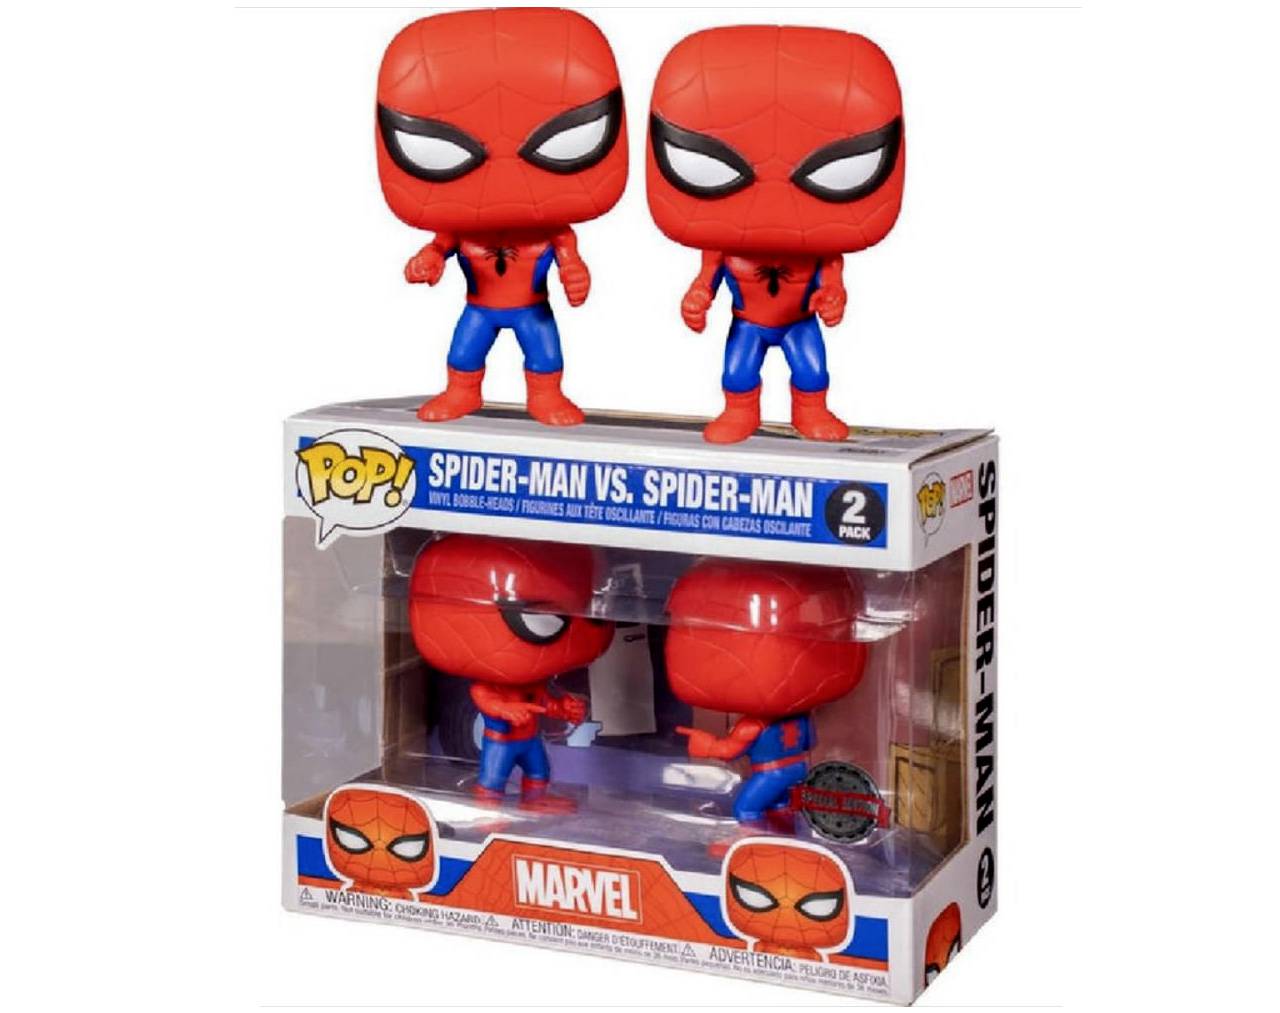 Spider Man vs Spider Man Pop! Vinyl